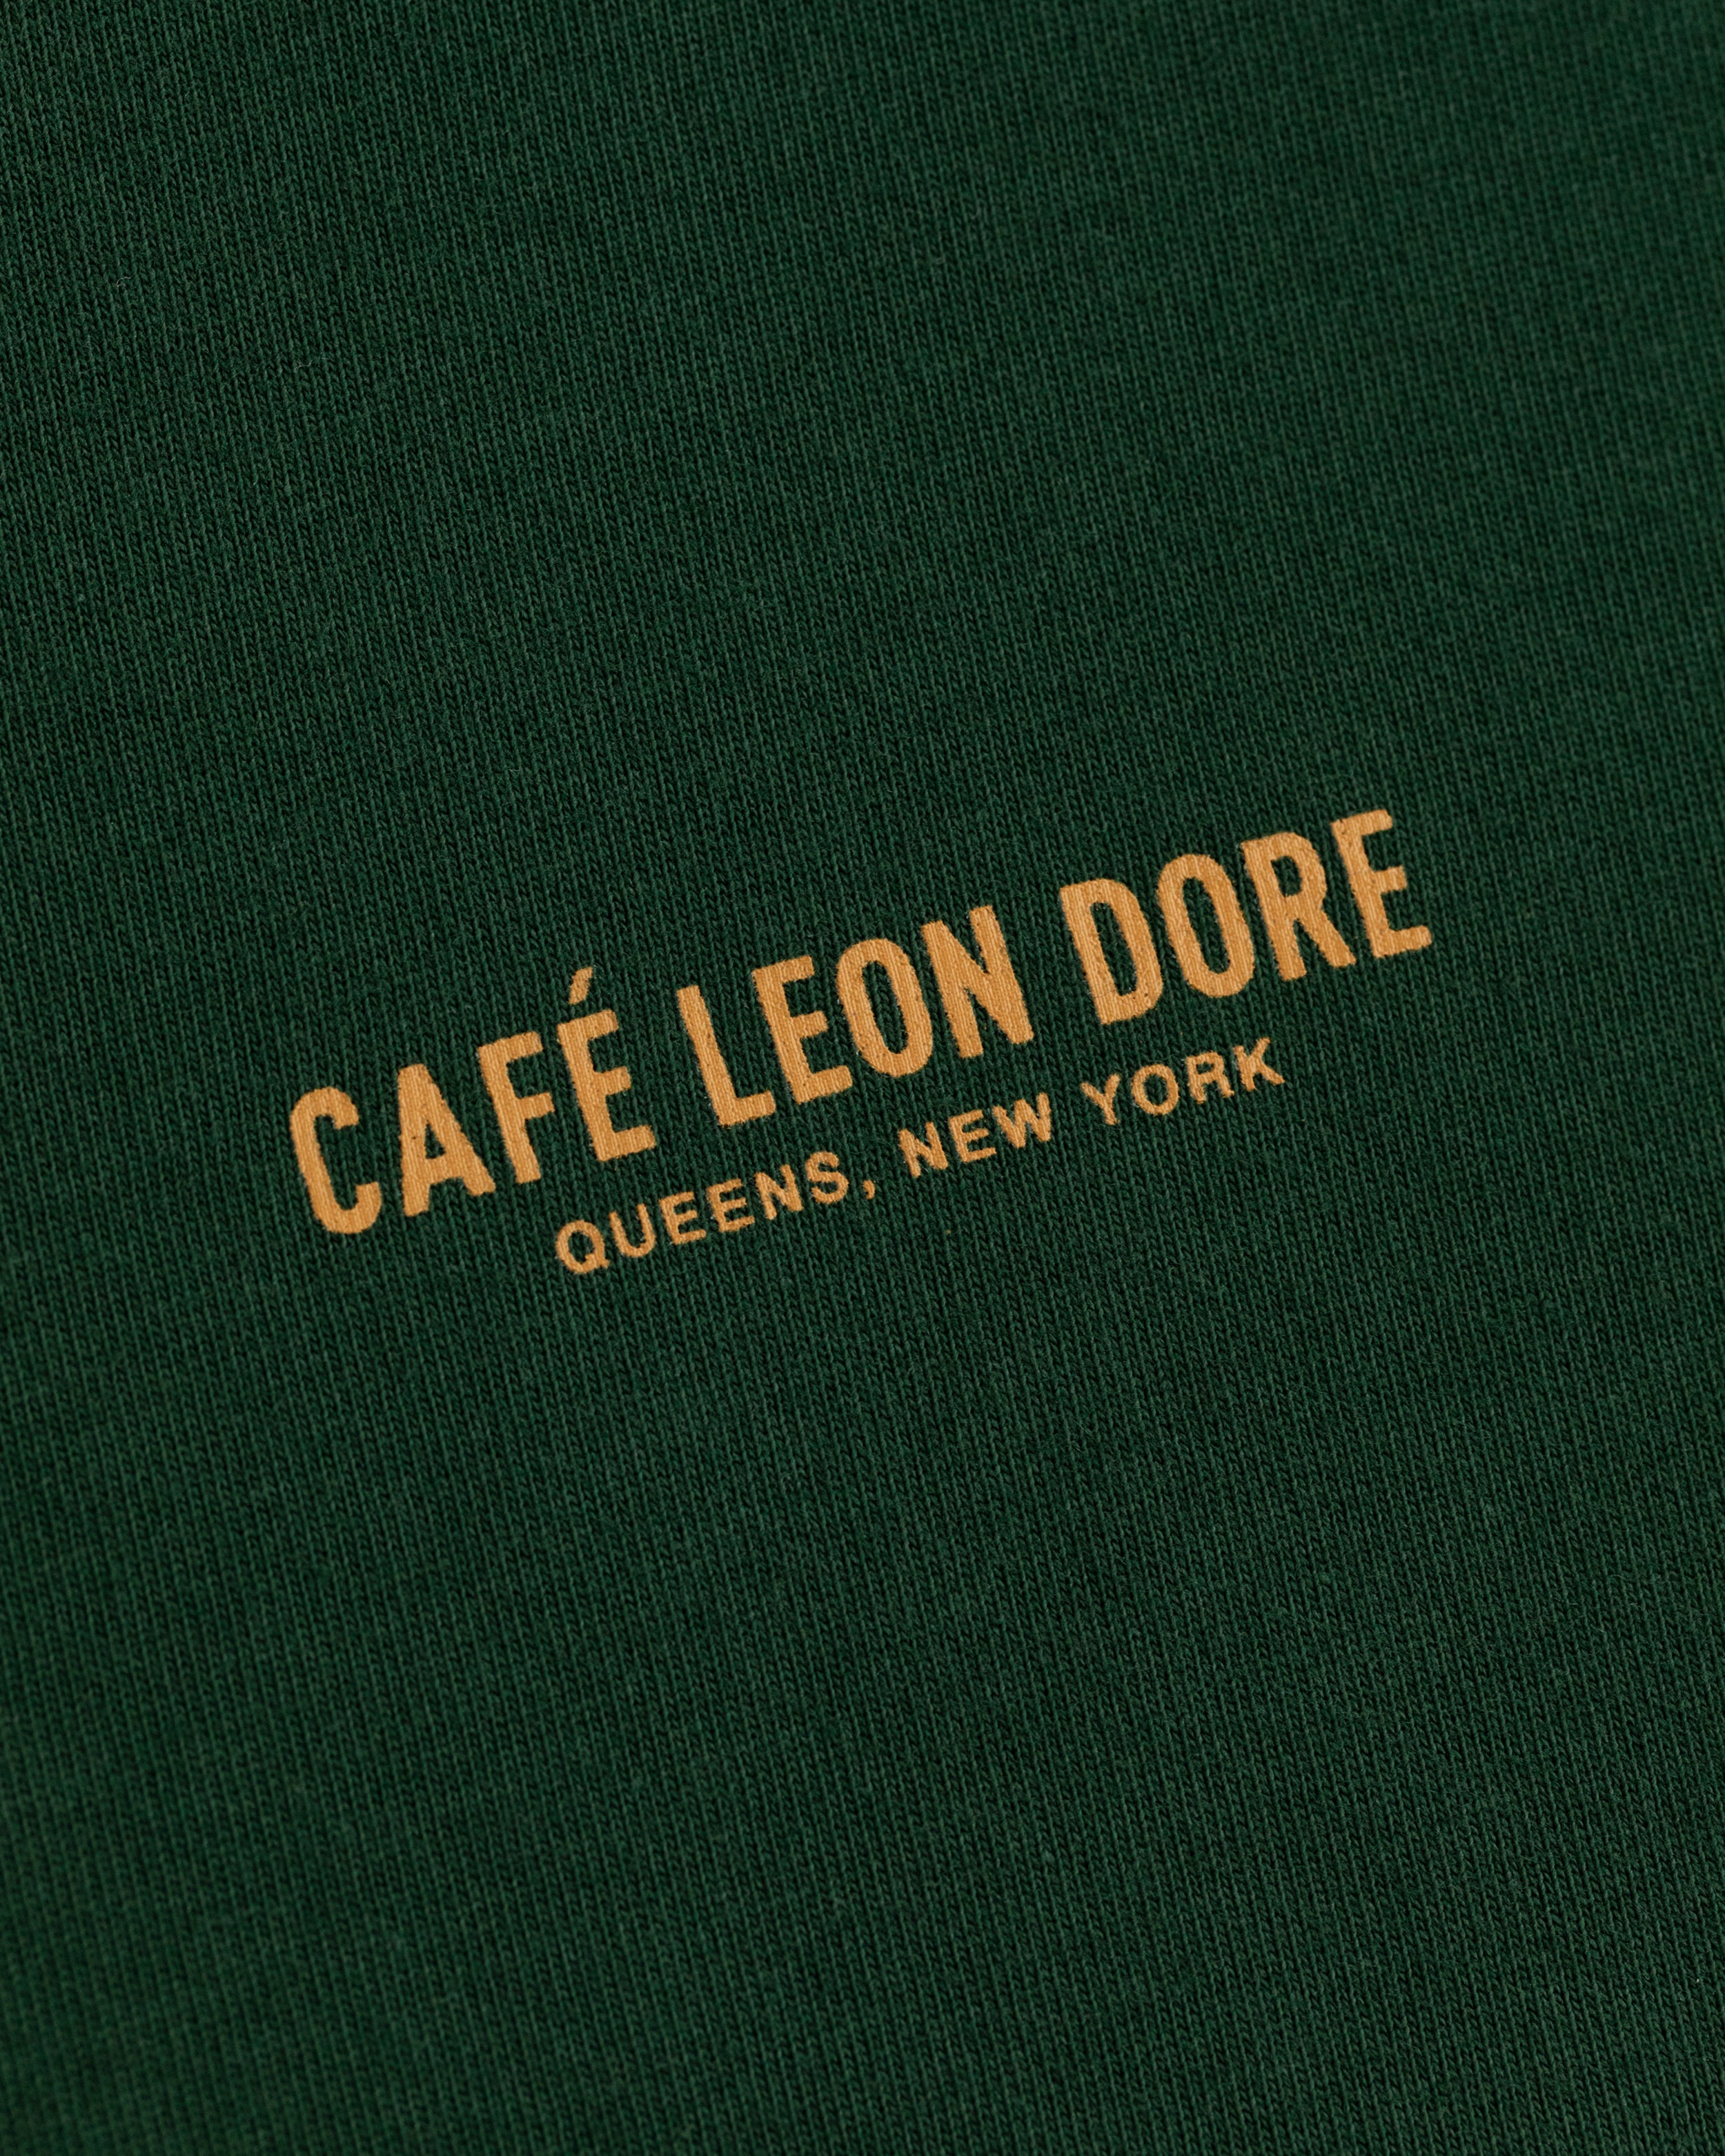 Café Leon Dore